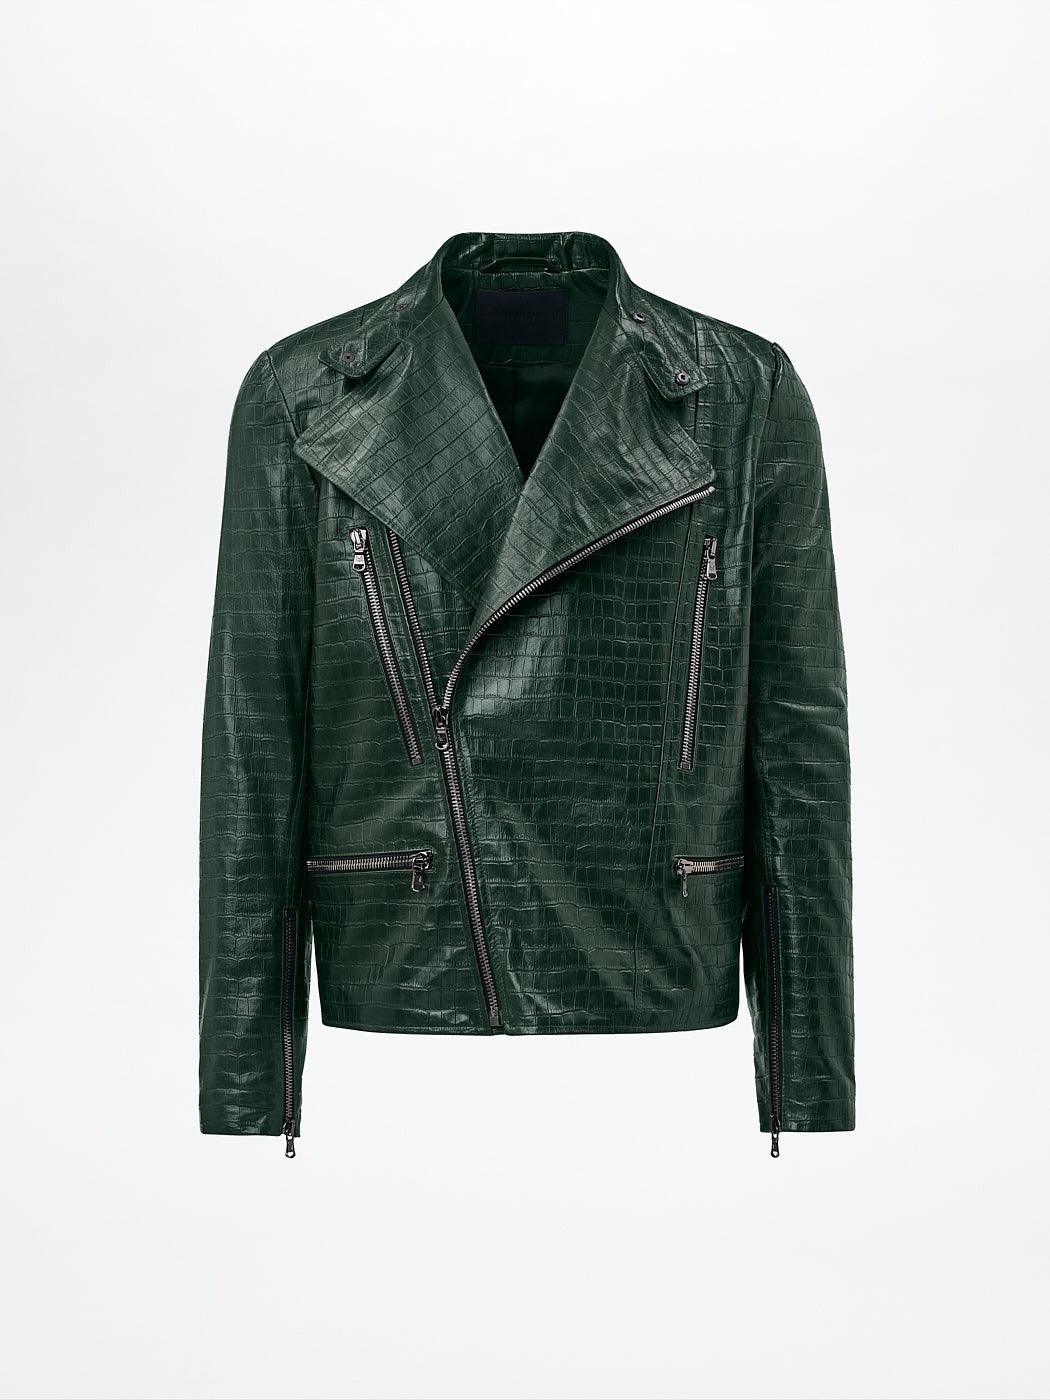 ﻿Croc-Embossed Leather Jacket For Men-5